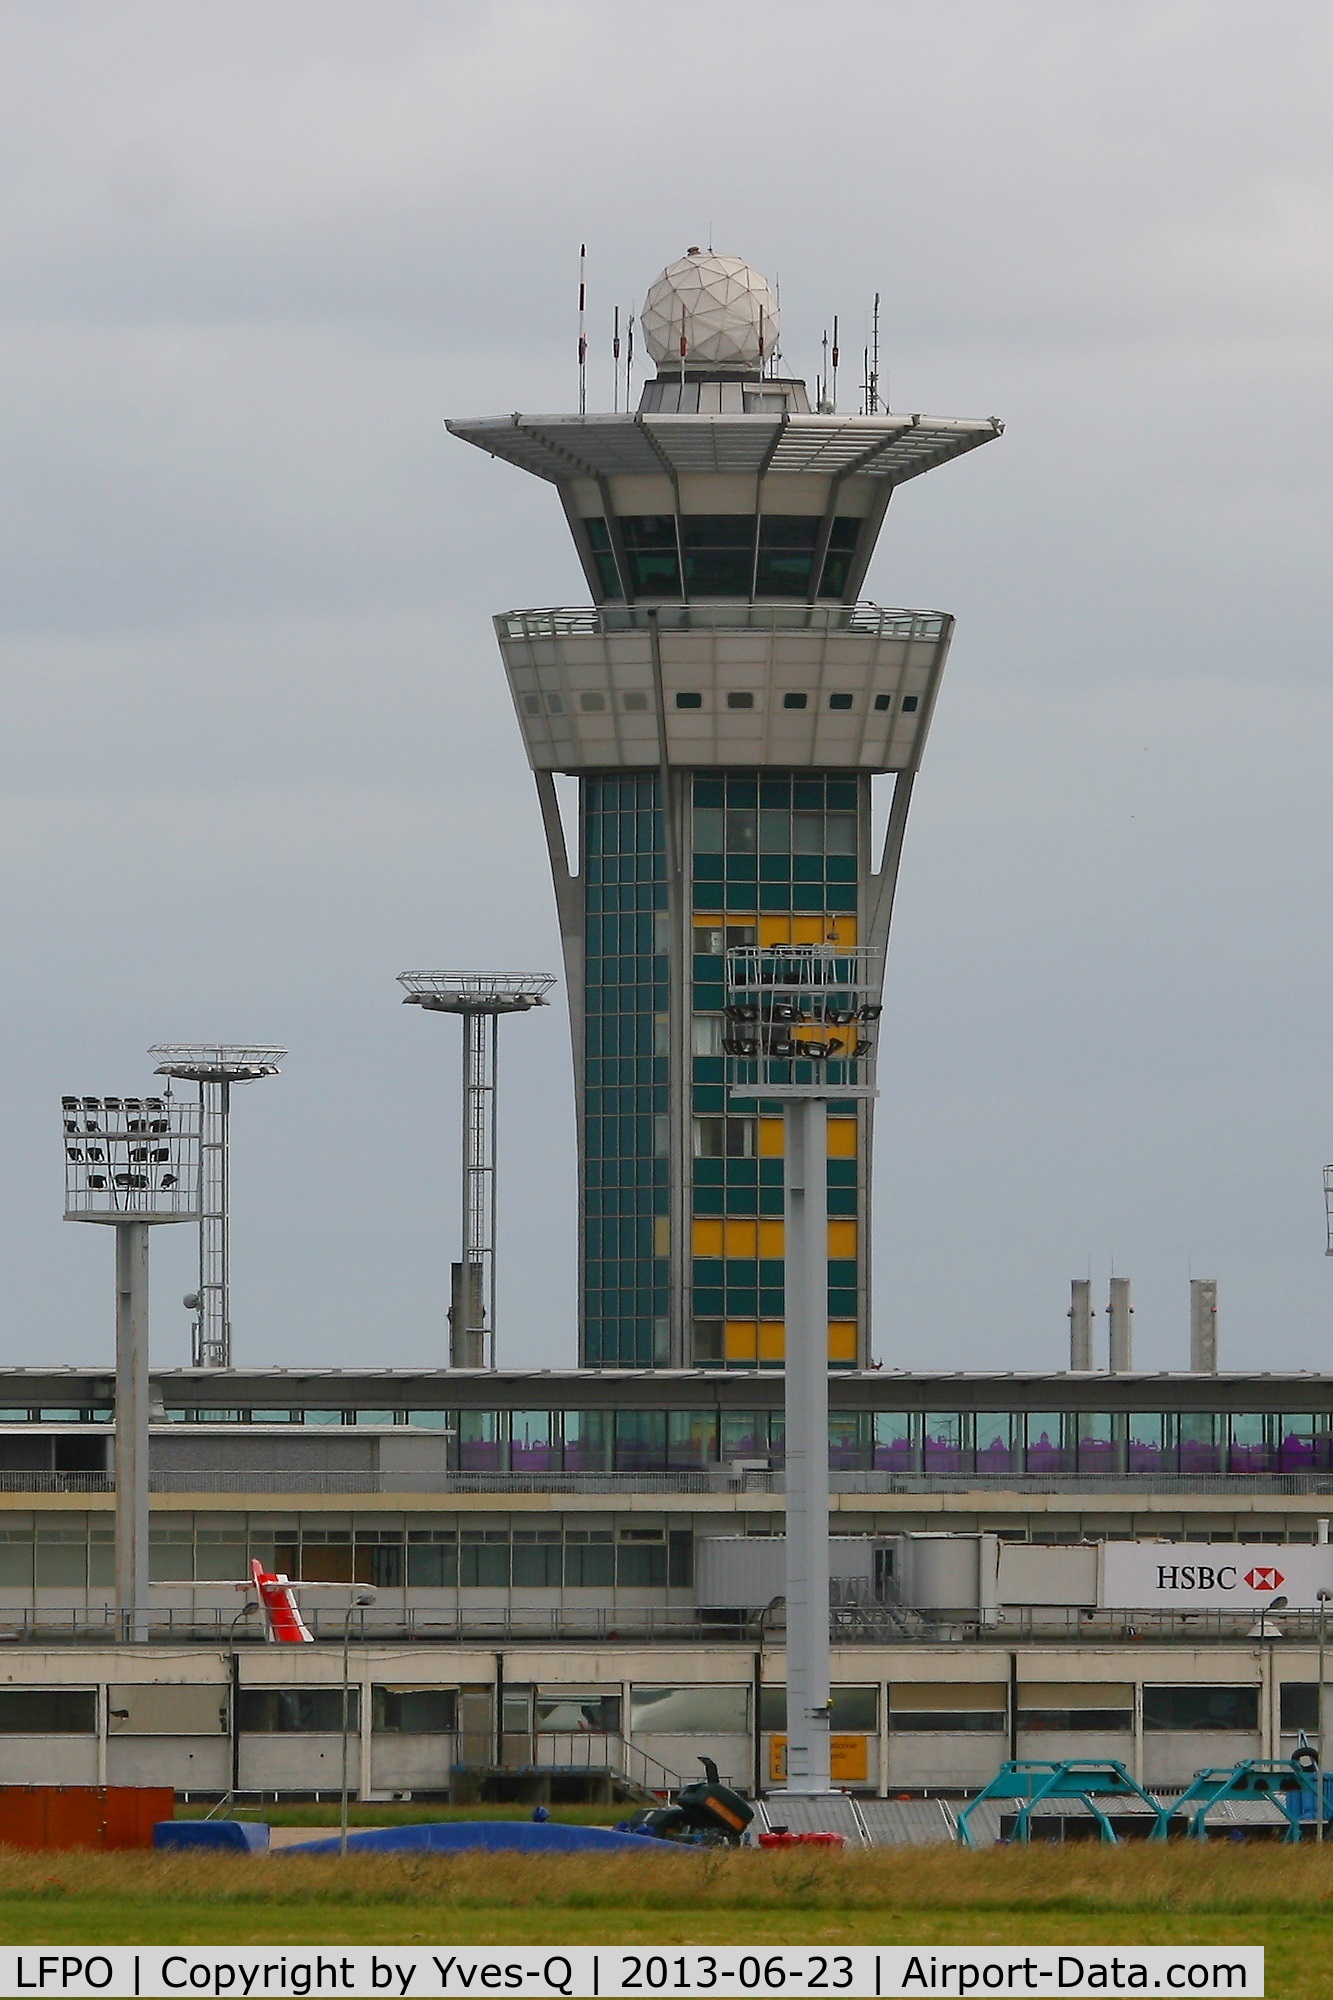 Paris Orly Airport, Orly (near Paris) France (LFPO) - Control Tower, Paris-Orly Airport (LFPO-ORY)